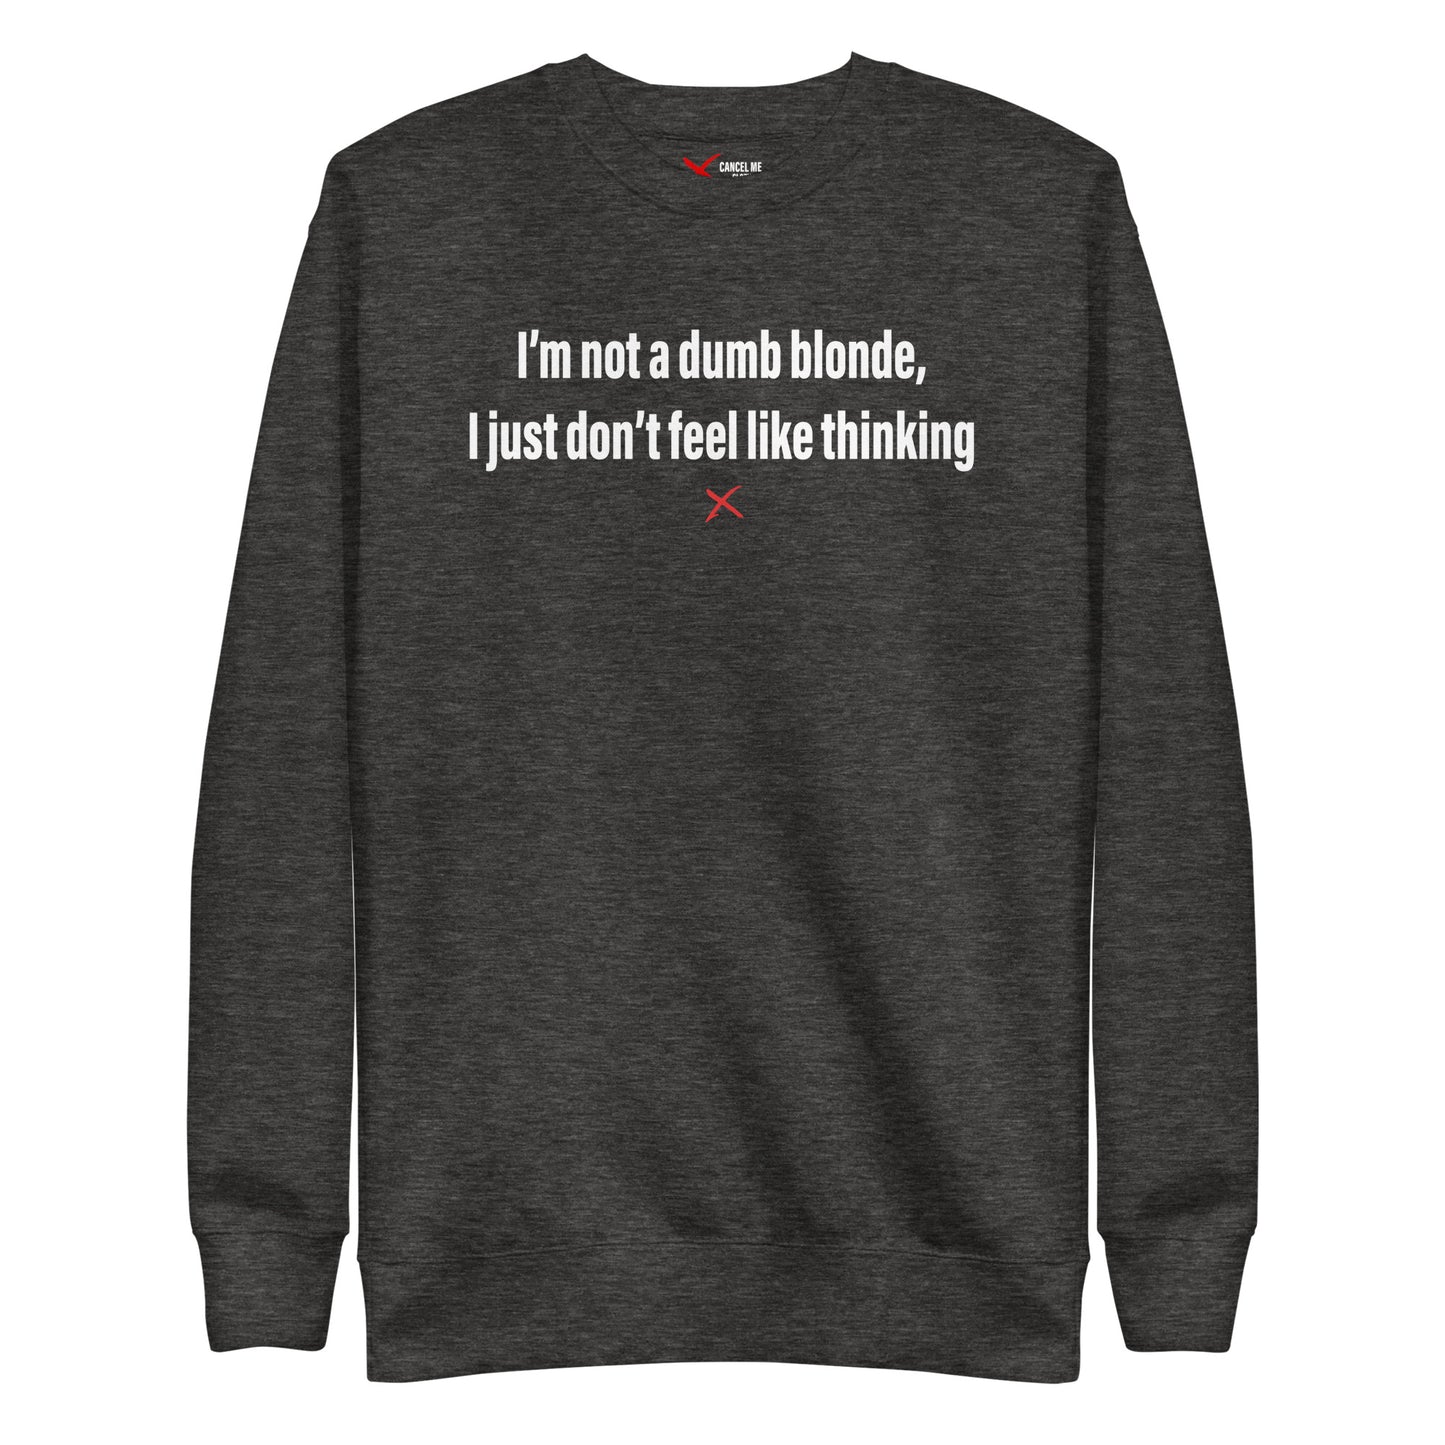 I'm not a dumb blonde, I just don't feel like thinking - Sweatshirt